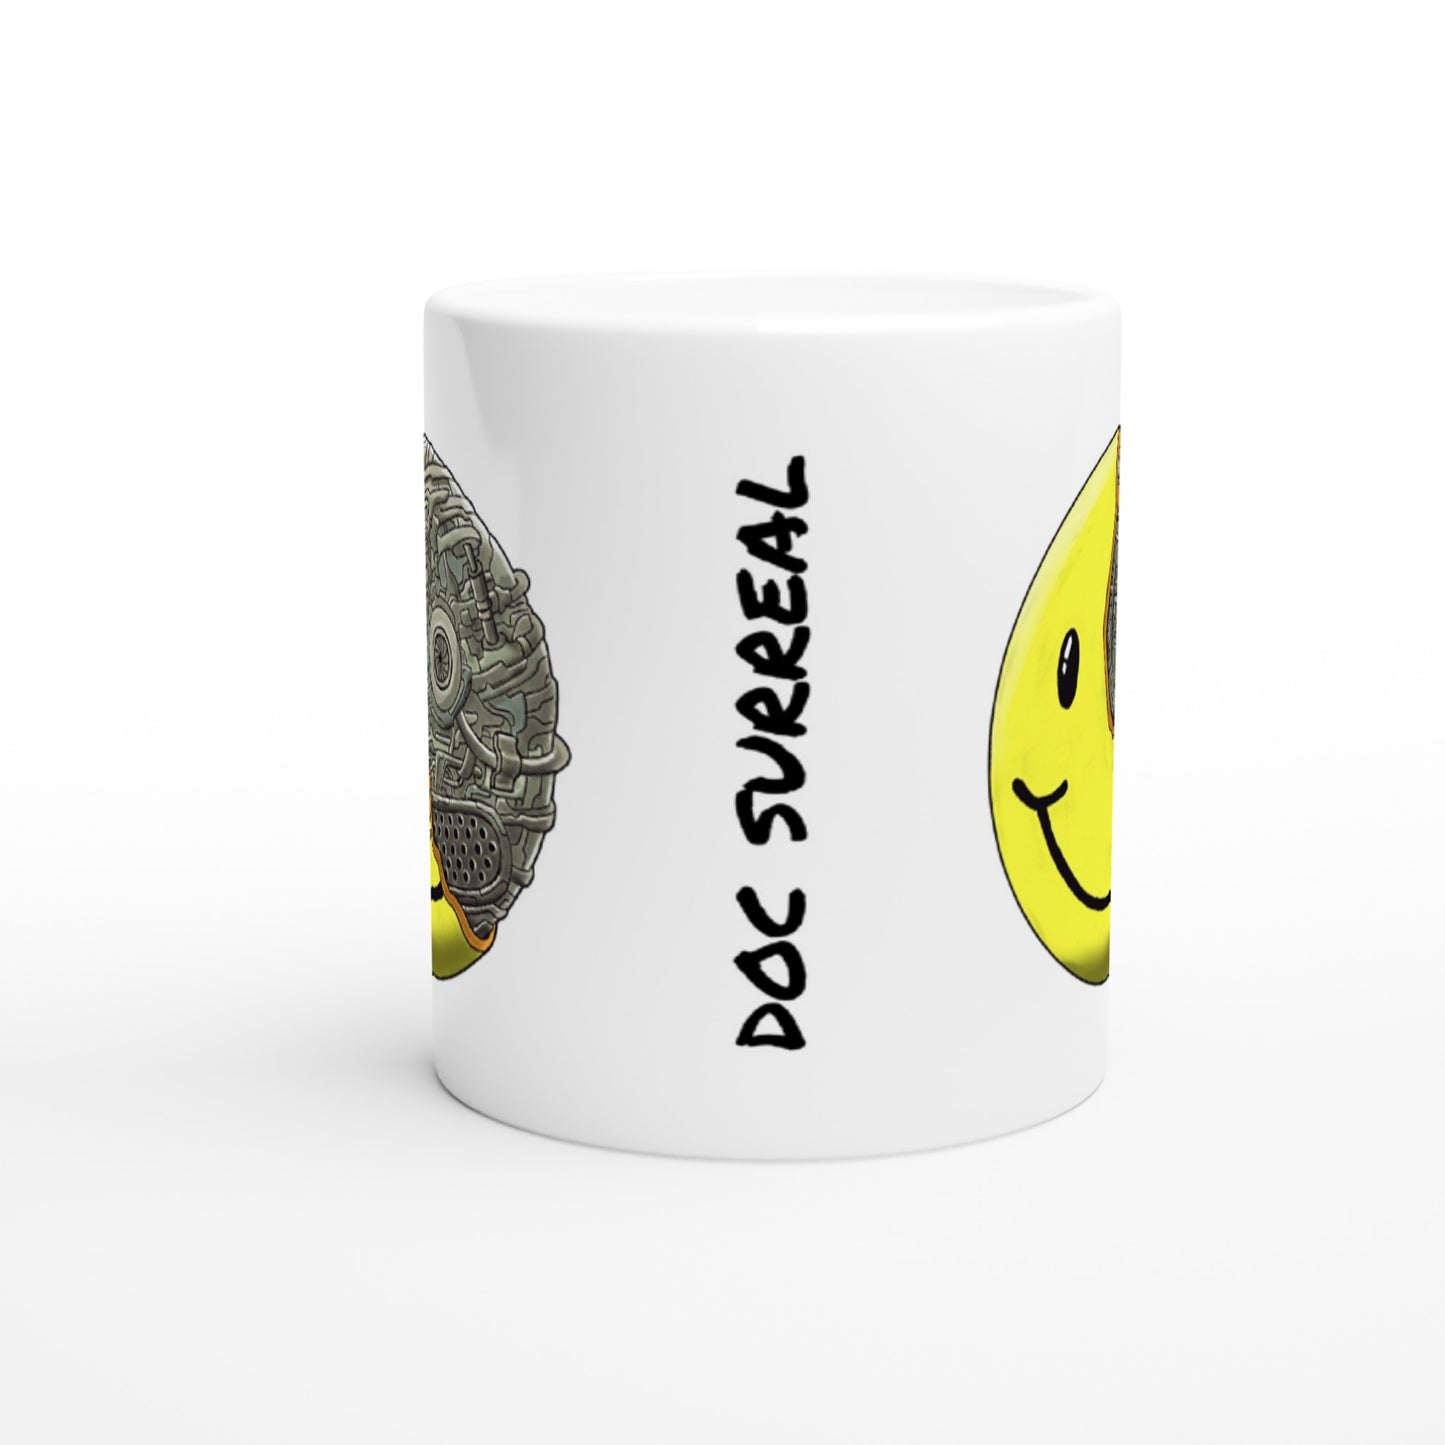 Smiley Bot 11oz Ceramic Mug